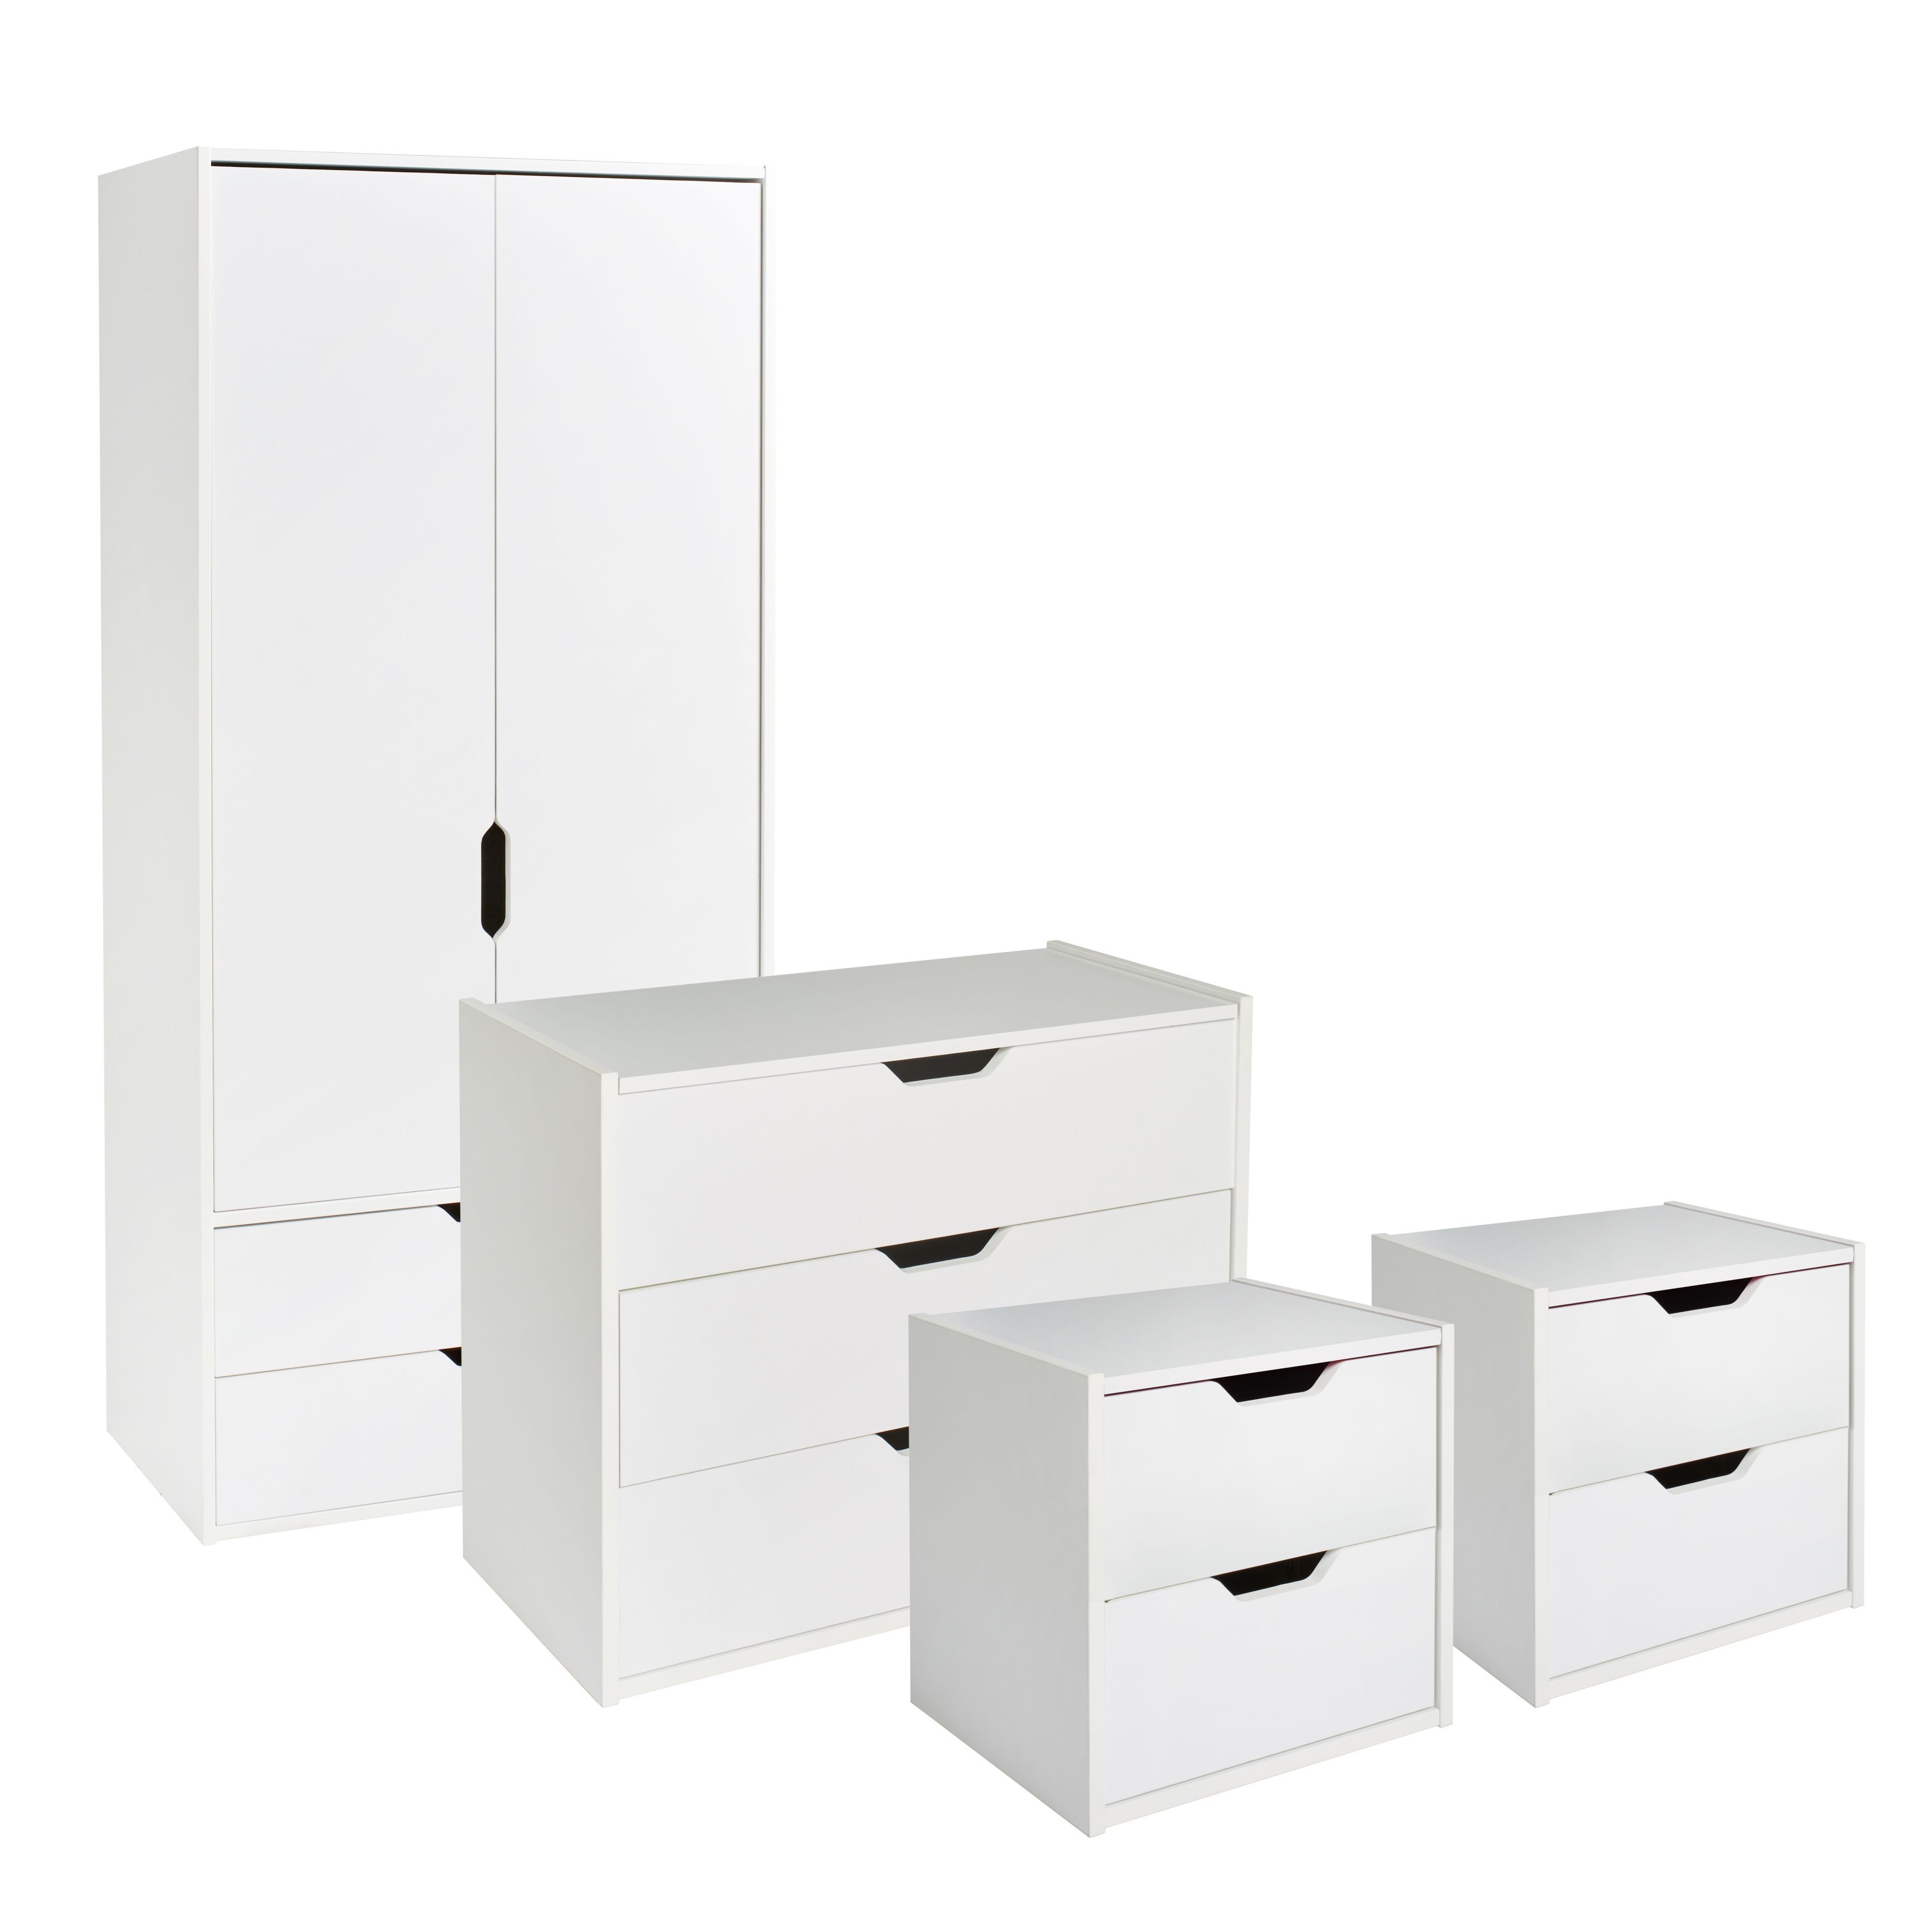 Hartnett White 4 piece Bedroom furniture set